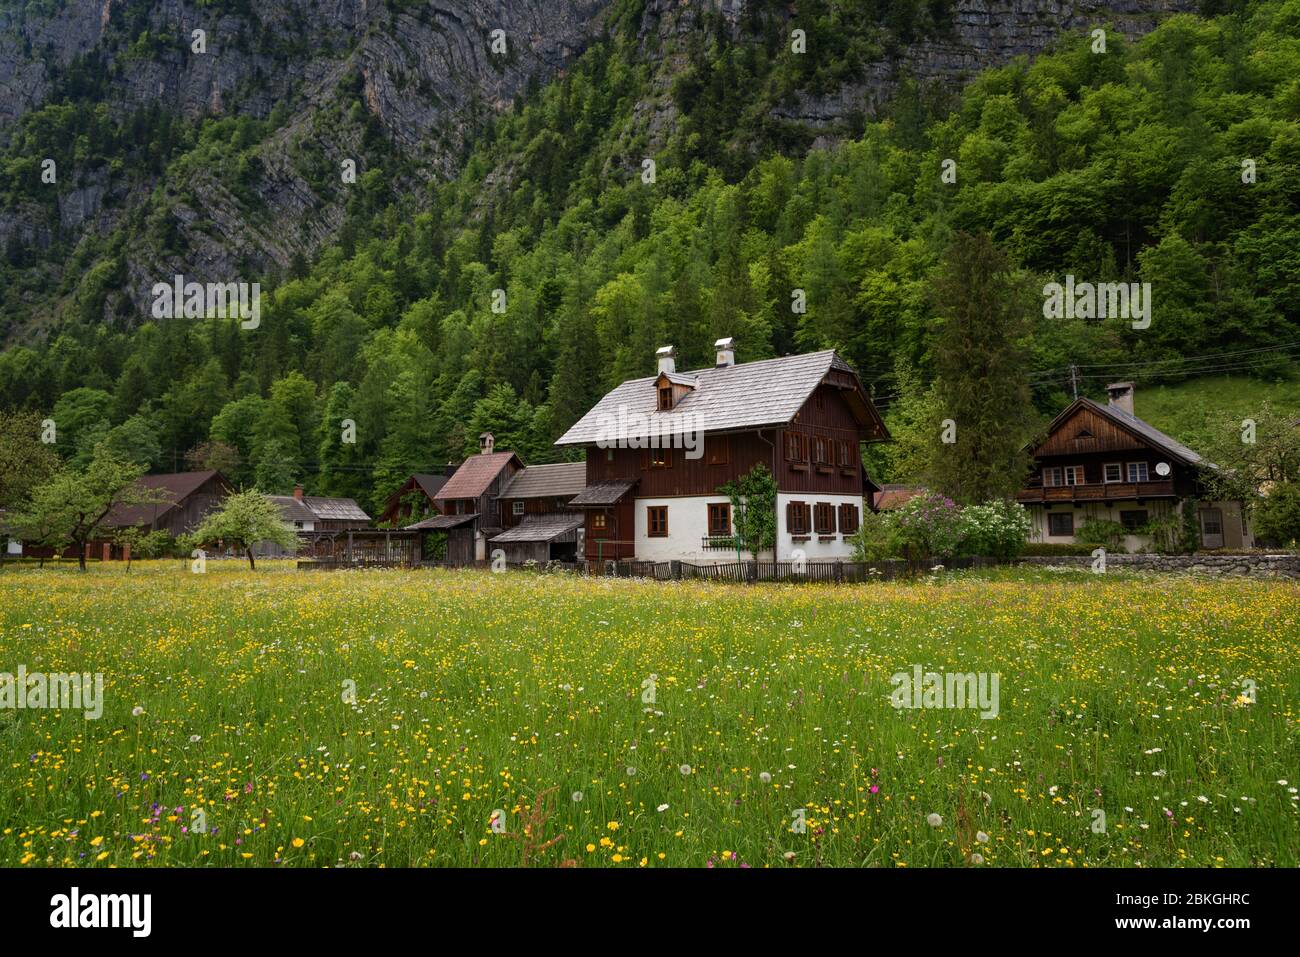 Typical Austrian Alpine houses with bright flowers, Hallstatt, Austria, Europe Stock Photo